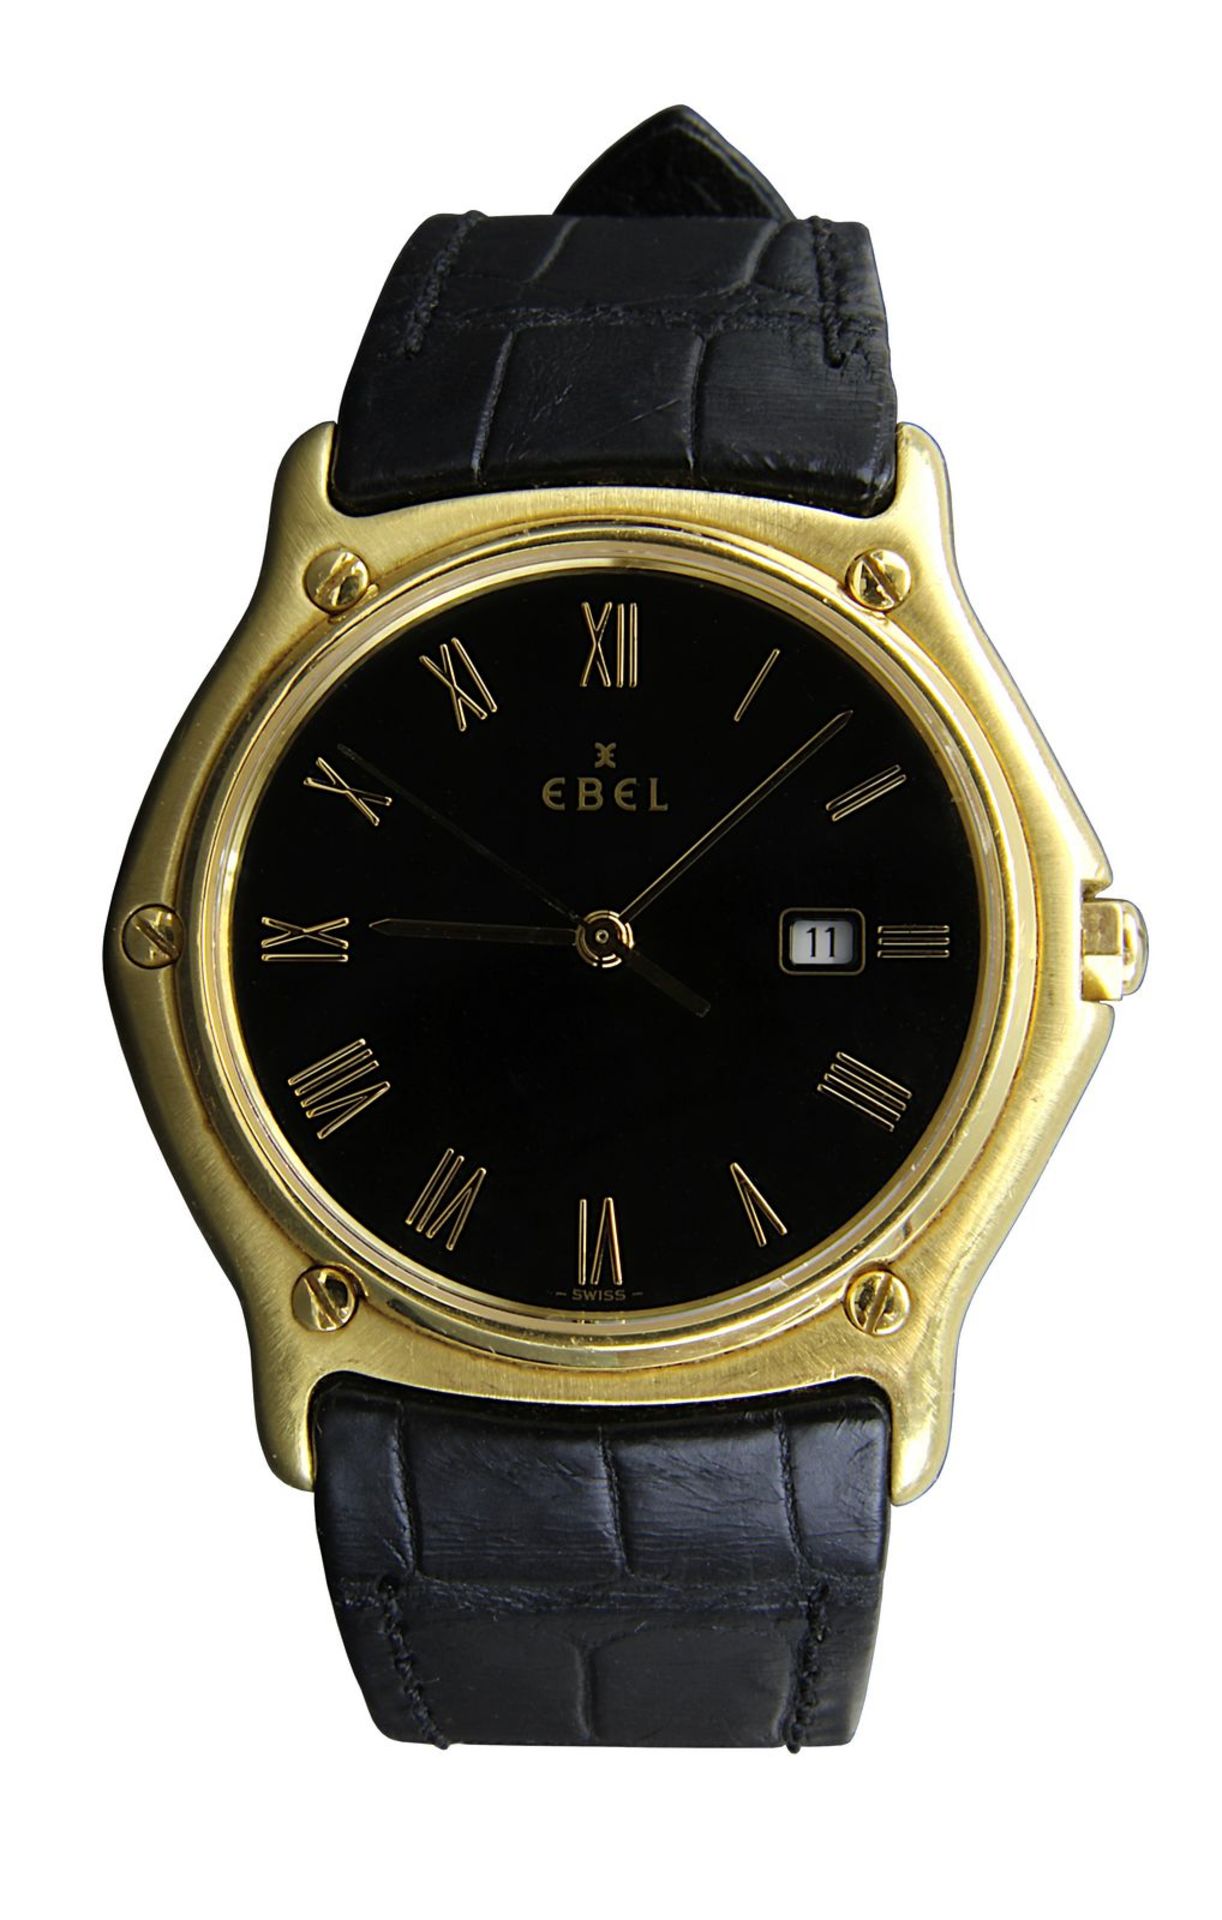 Ebel-Armbanduhr, Modell Classic, 18-karätiges Gelbgold, mit Original-Ebel-Quarzwerk, rückseitig